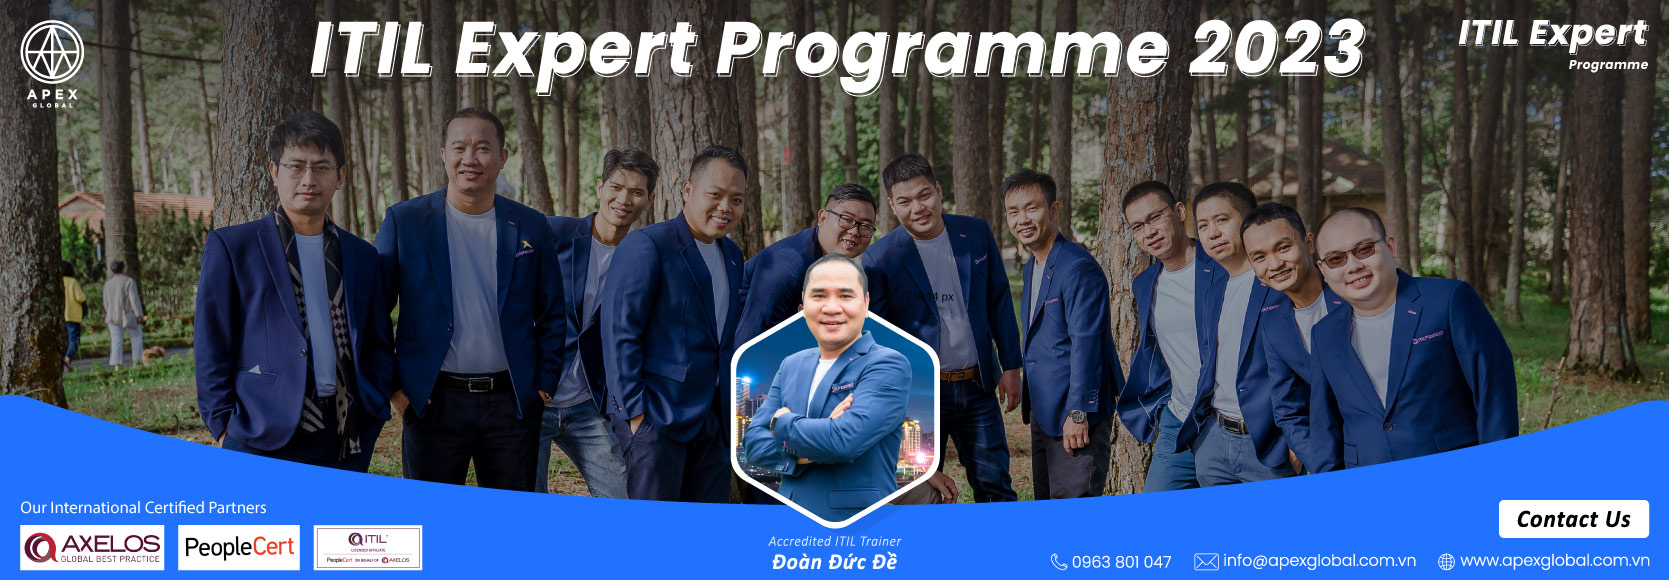 ITIL-Expert-Programme-2023